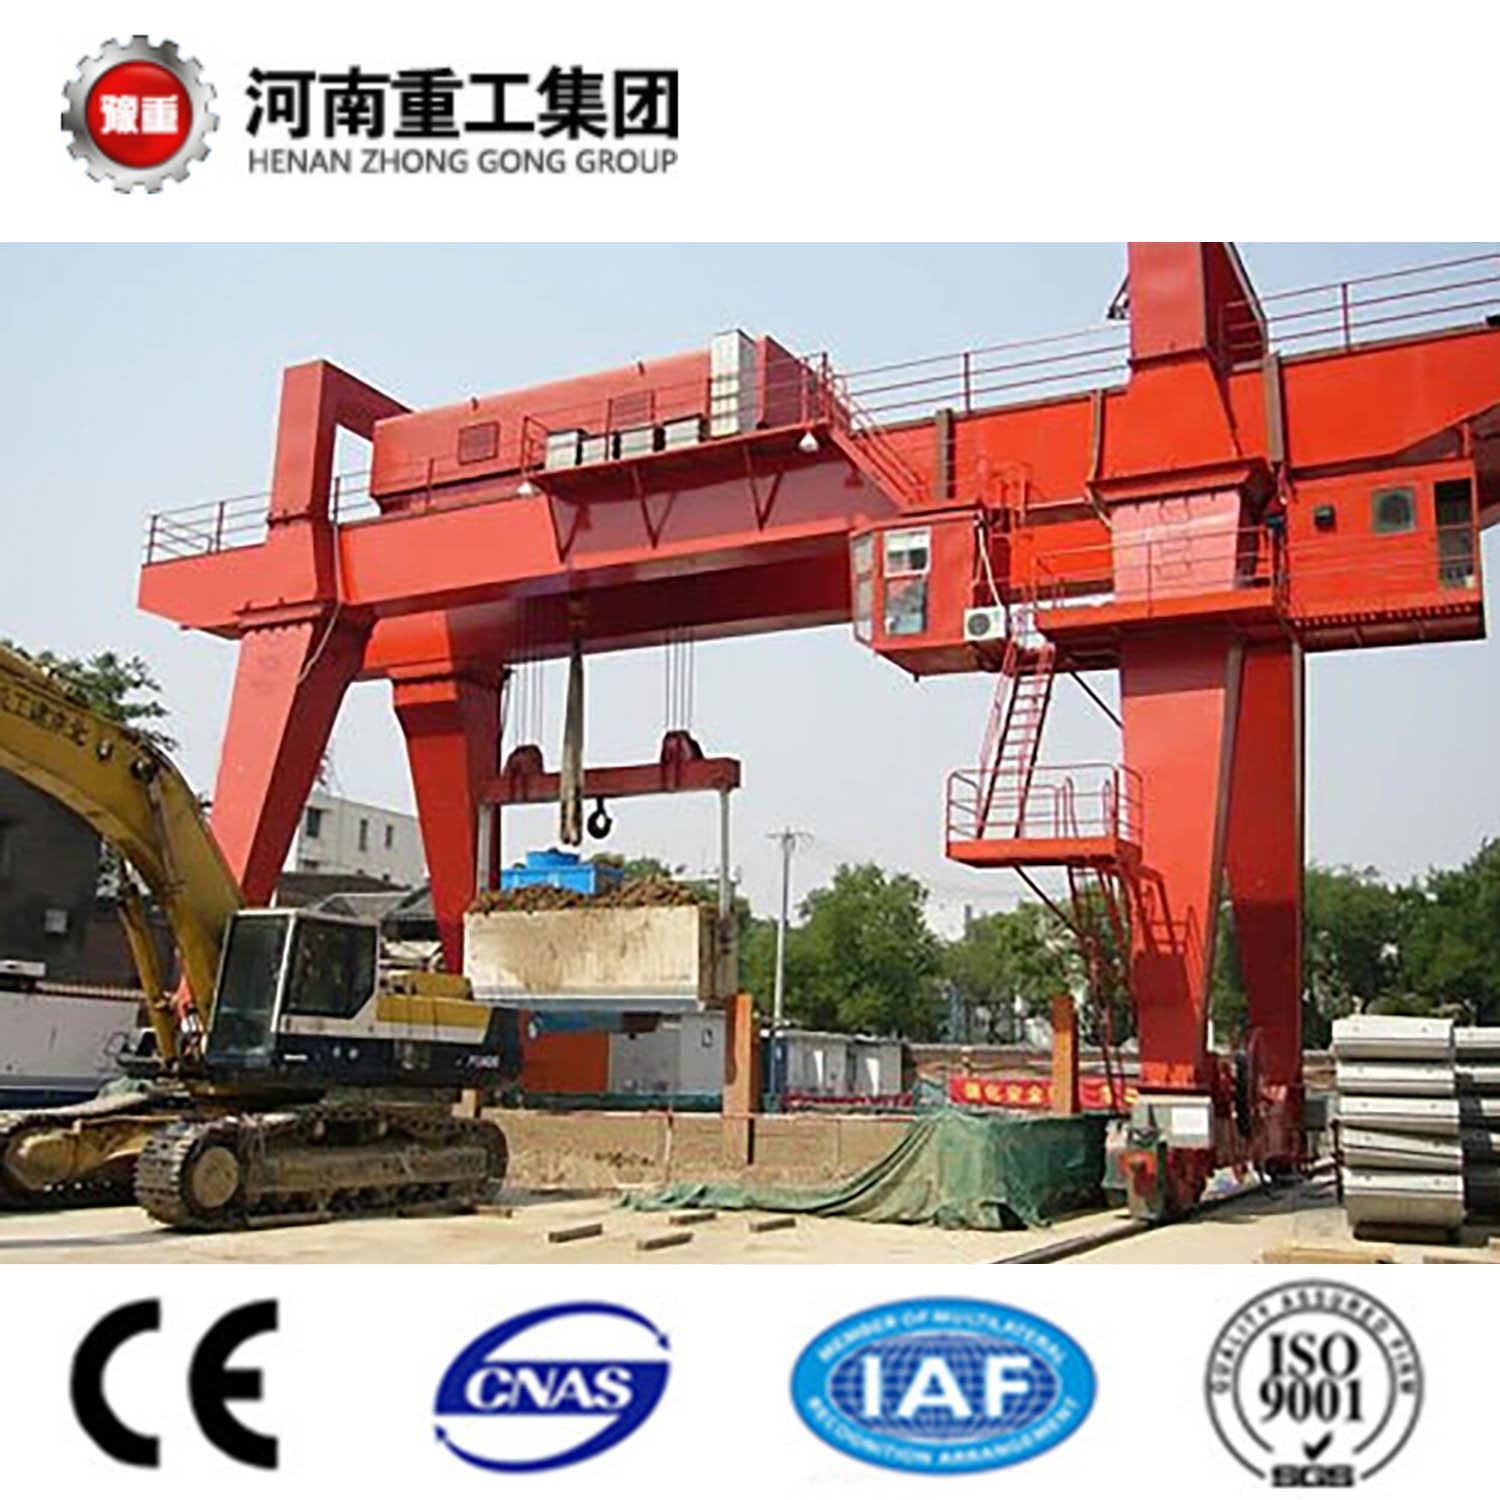 FEM/ISO Standard 500t Lifting Capacity Gantry/Door Crane for Material Handling